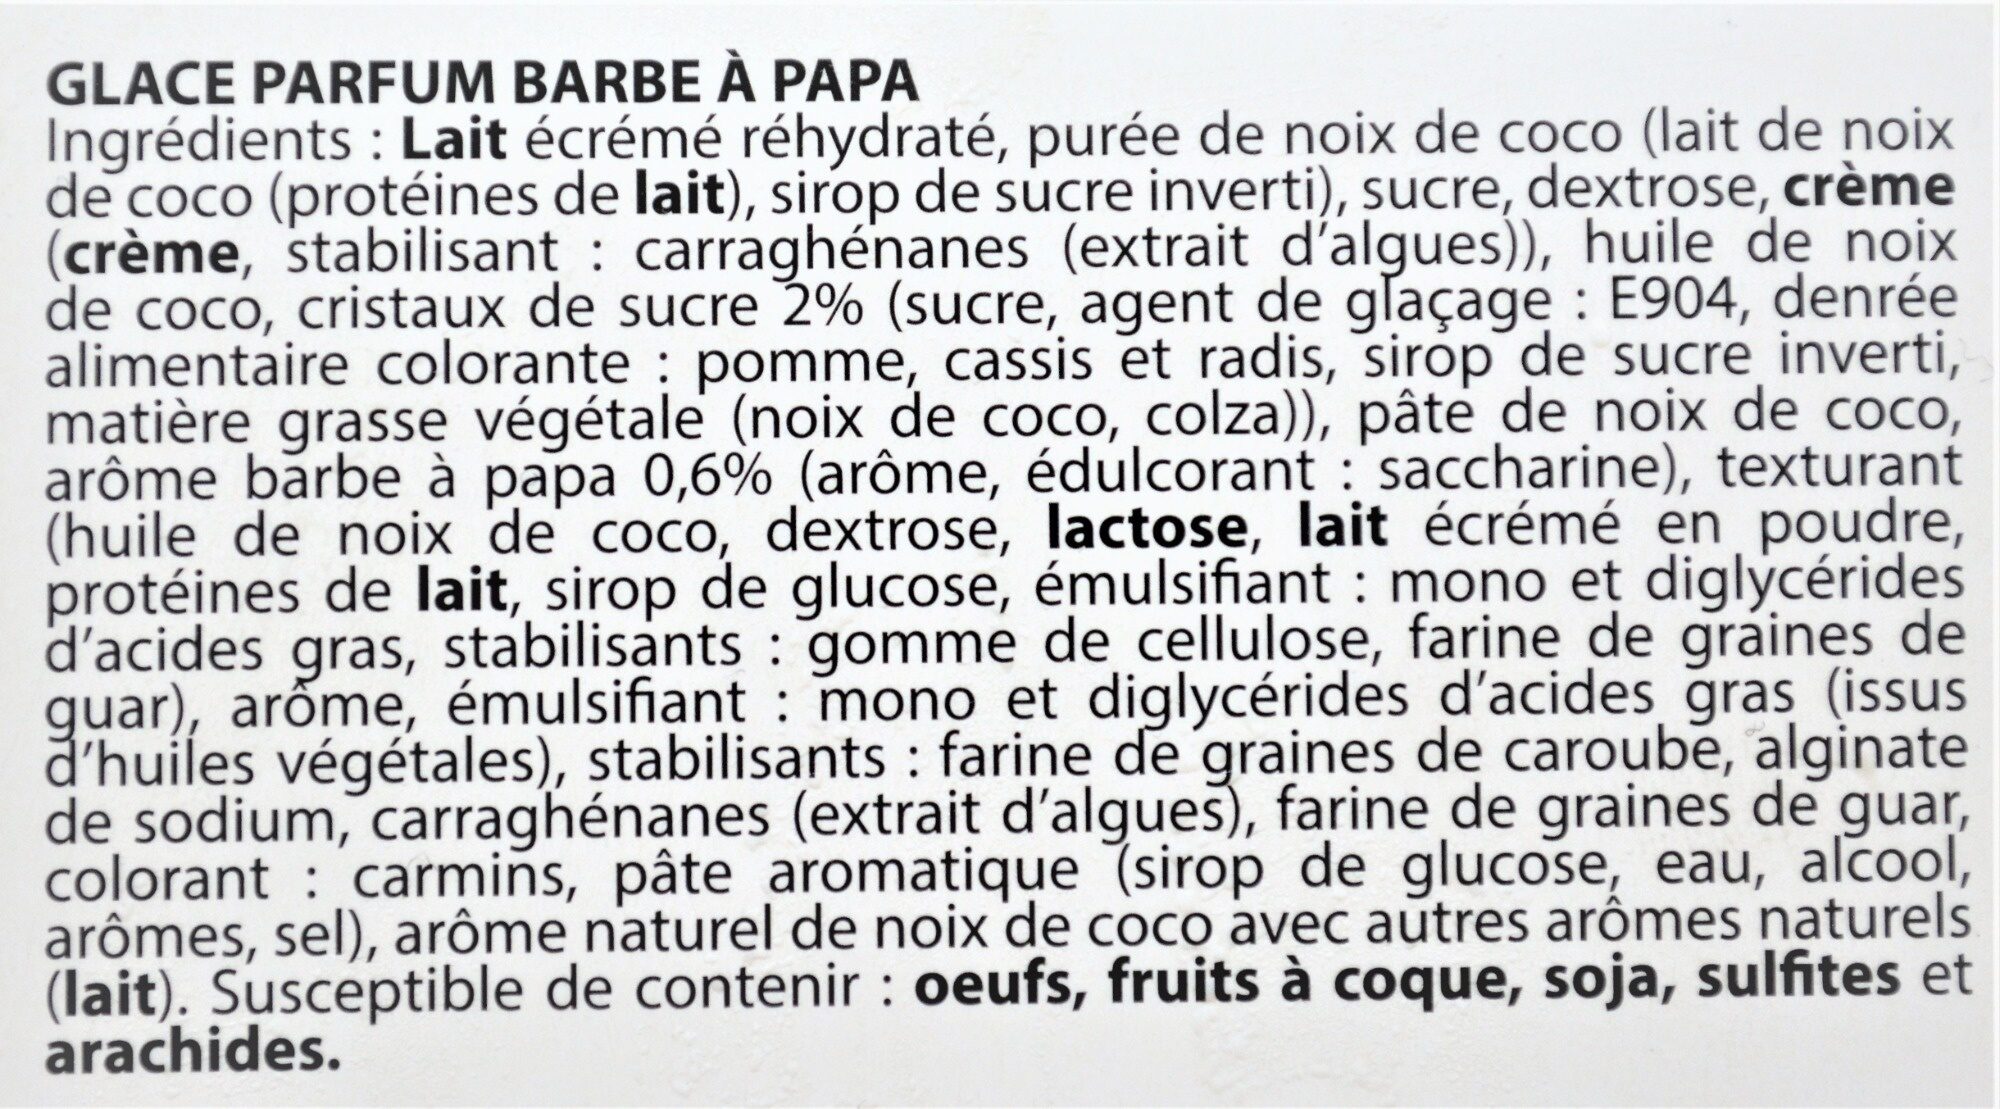 Glace parfum BARBE A PAPA - Ingredients - fr